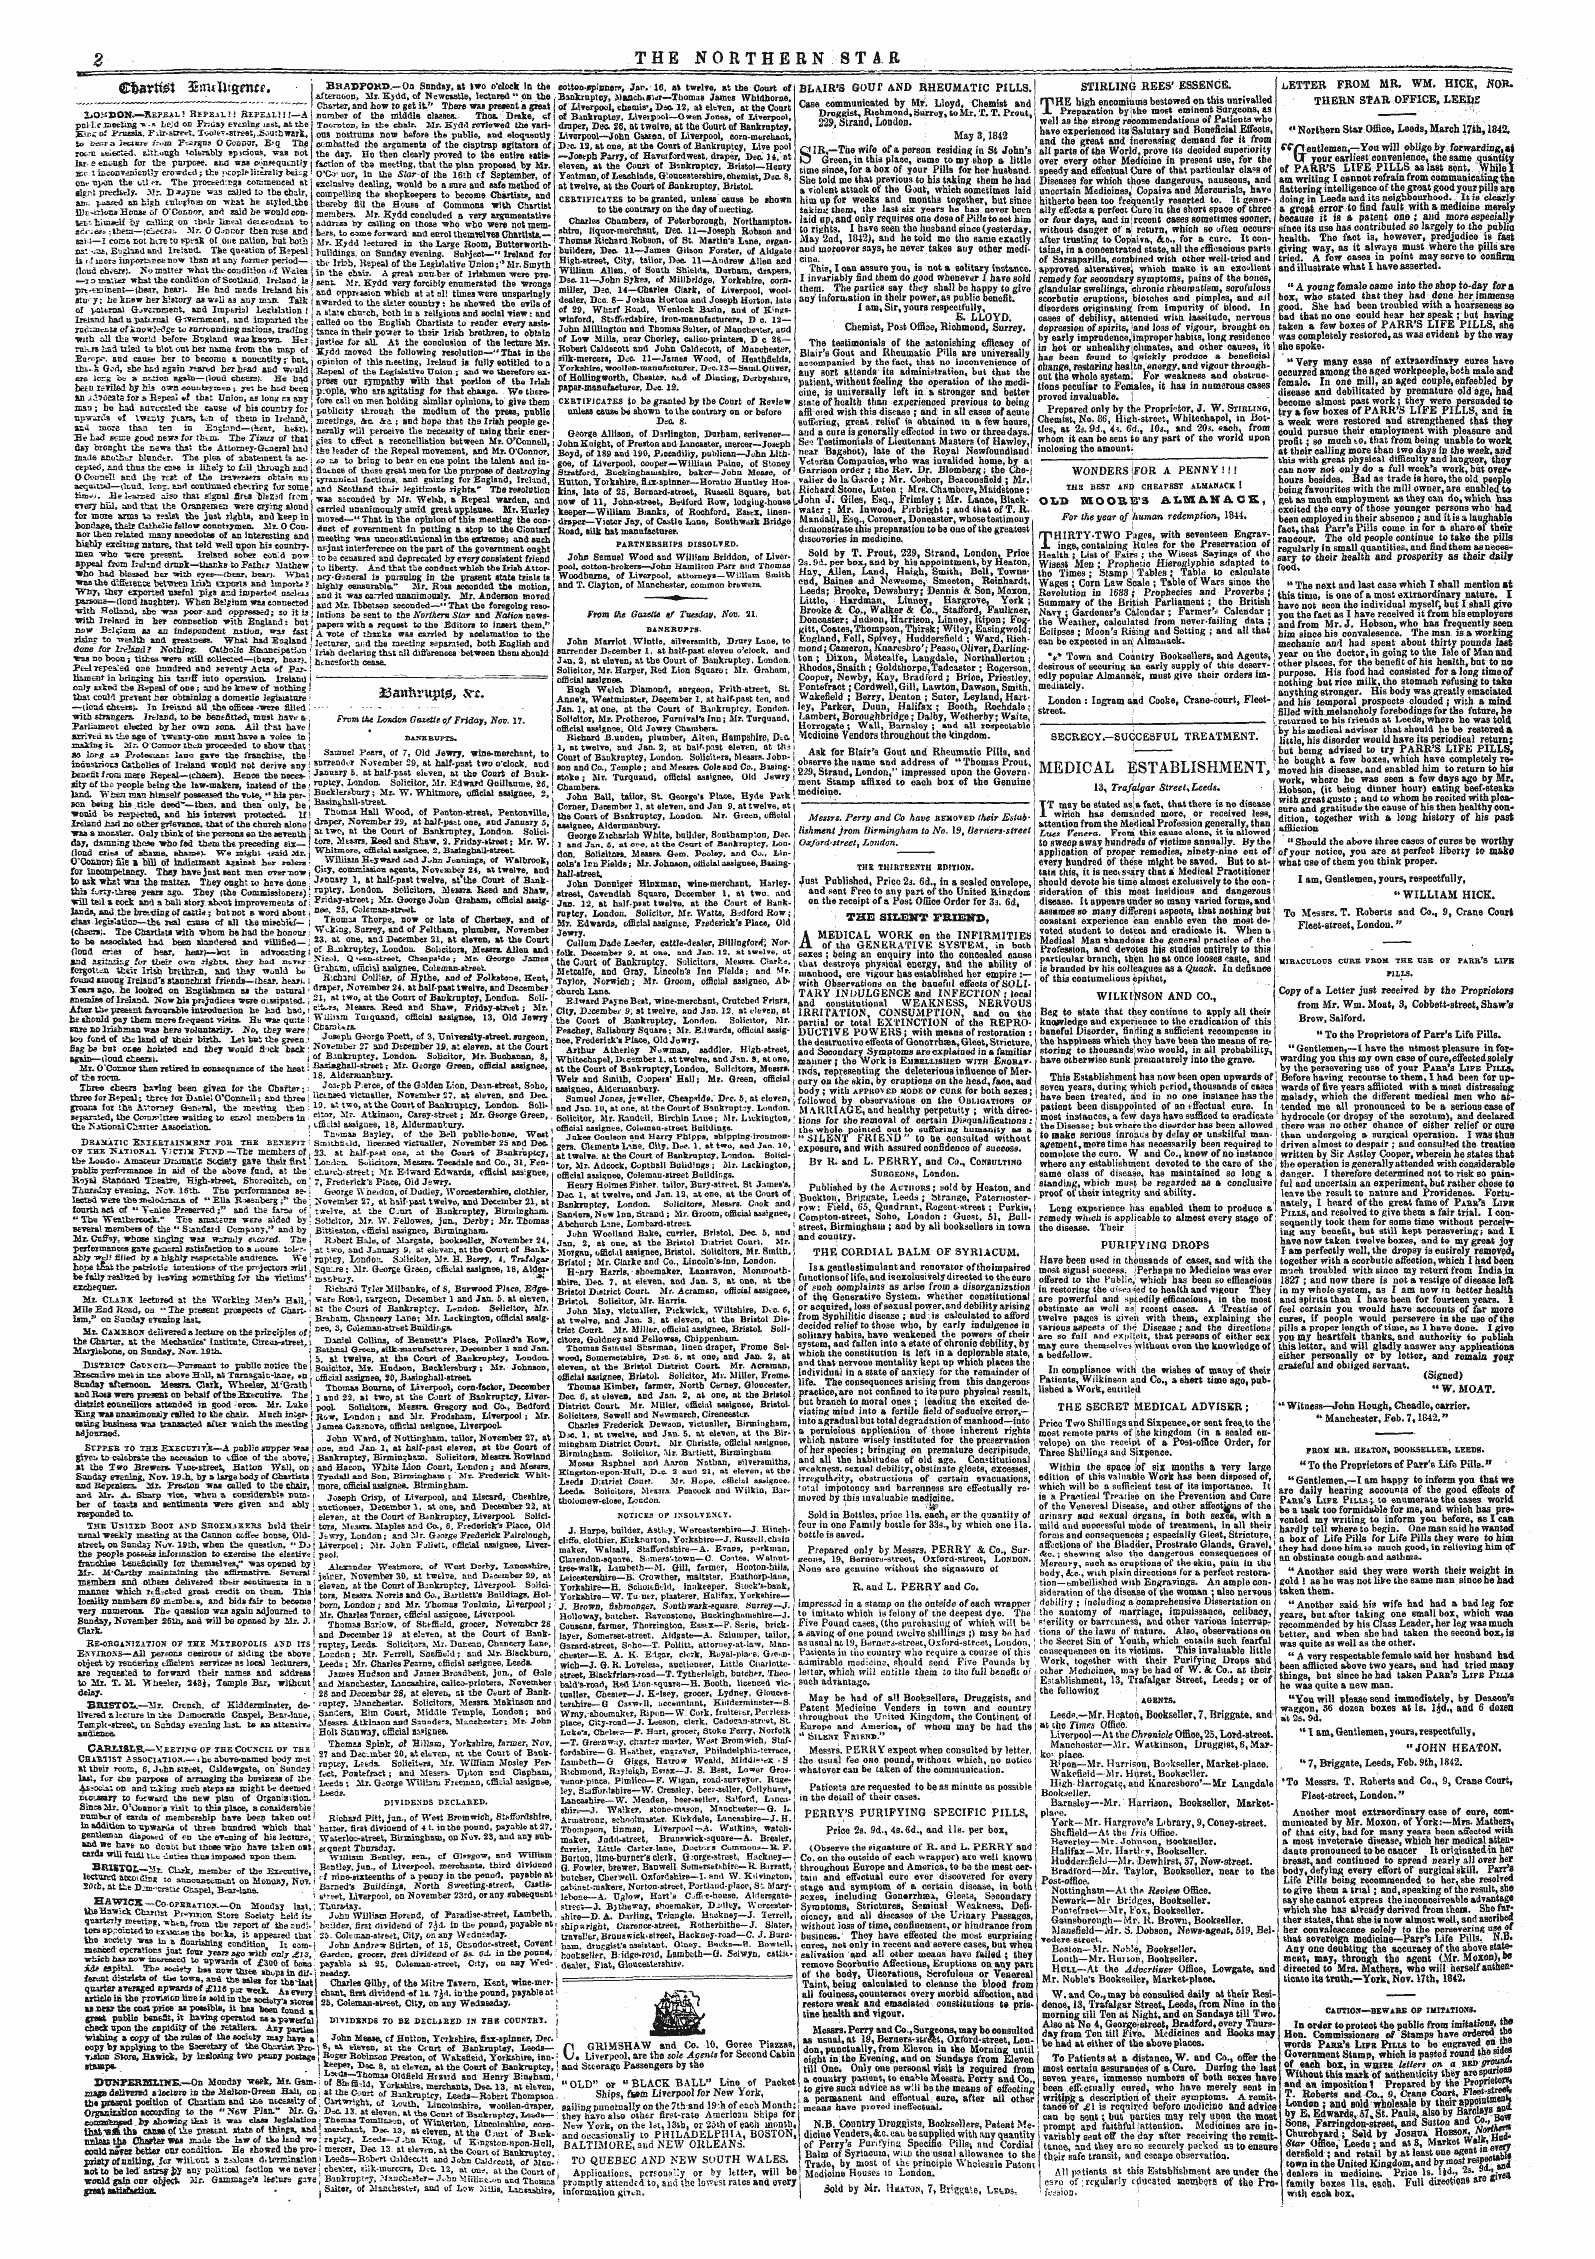 Northern Star (1837-1852): jS F Y, 6th edition - Untitled Ad